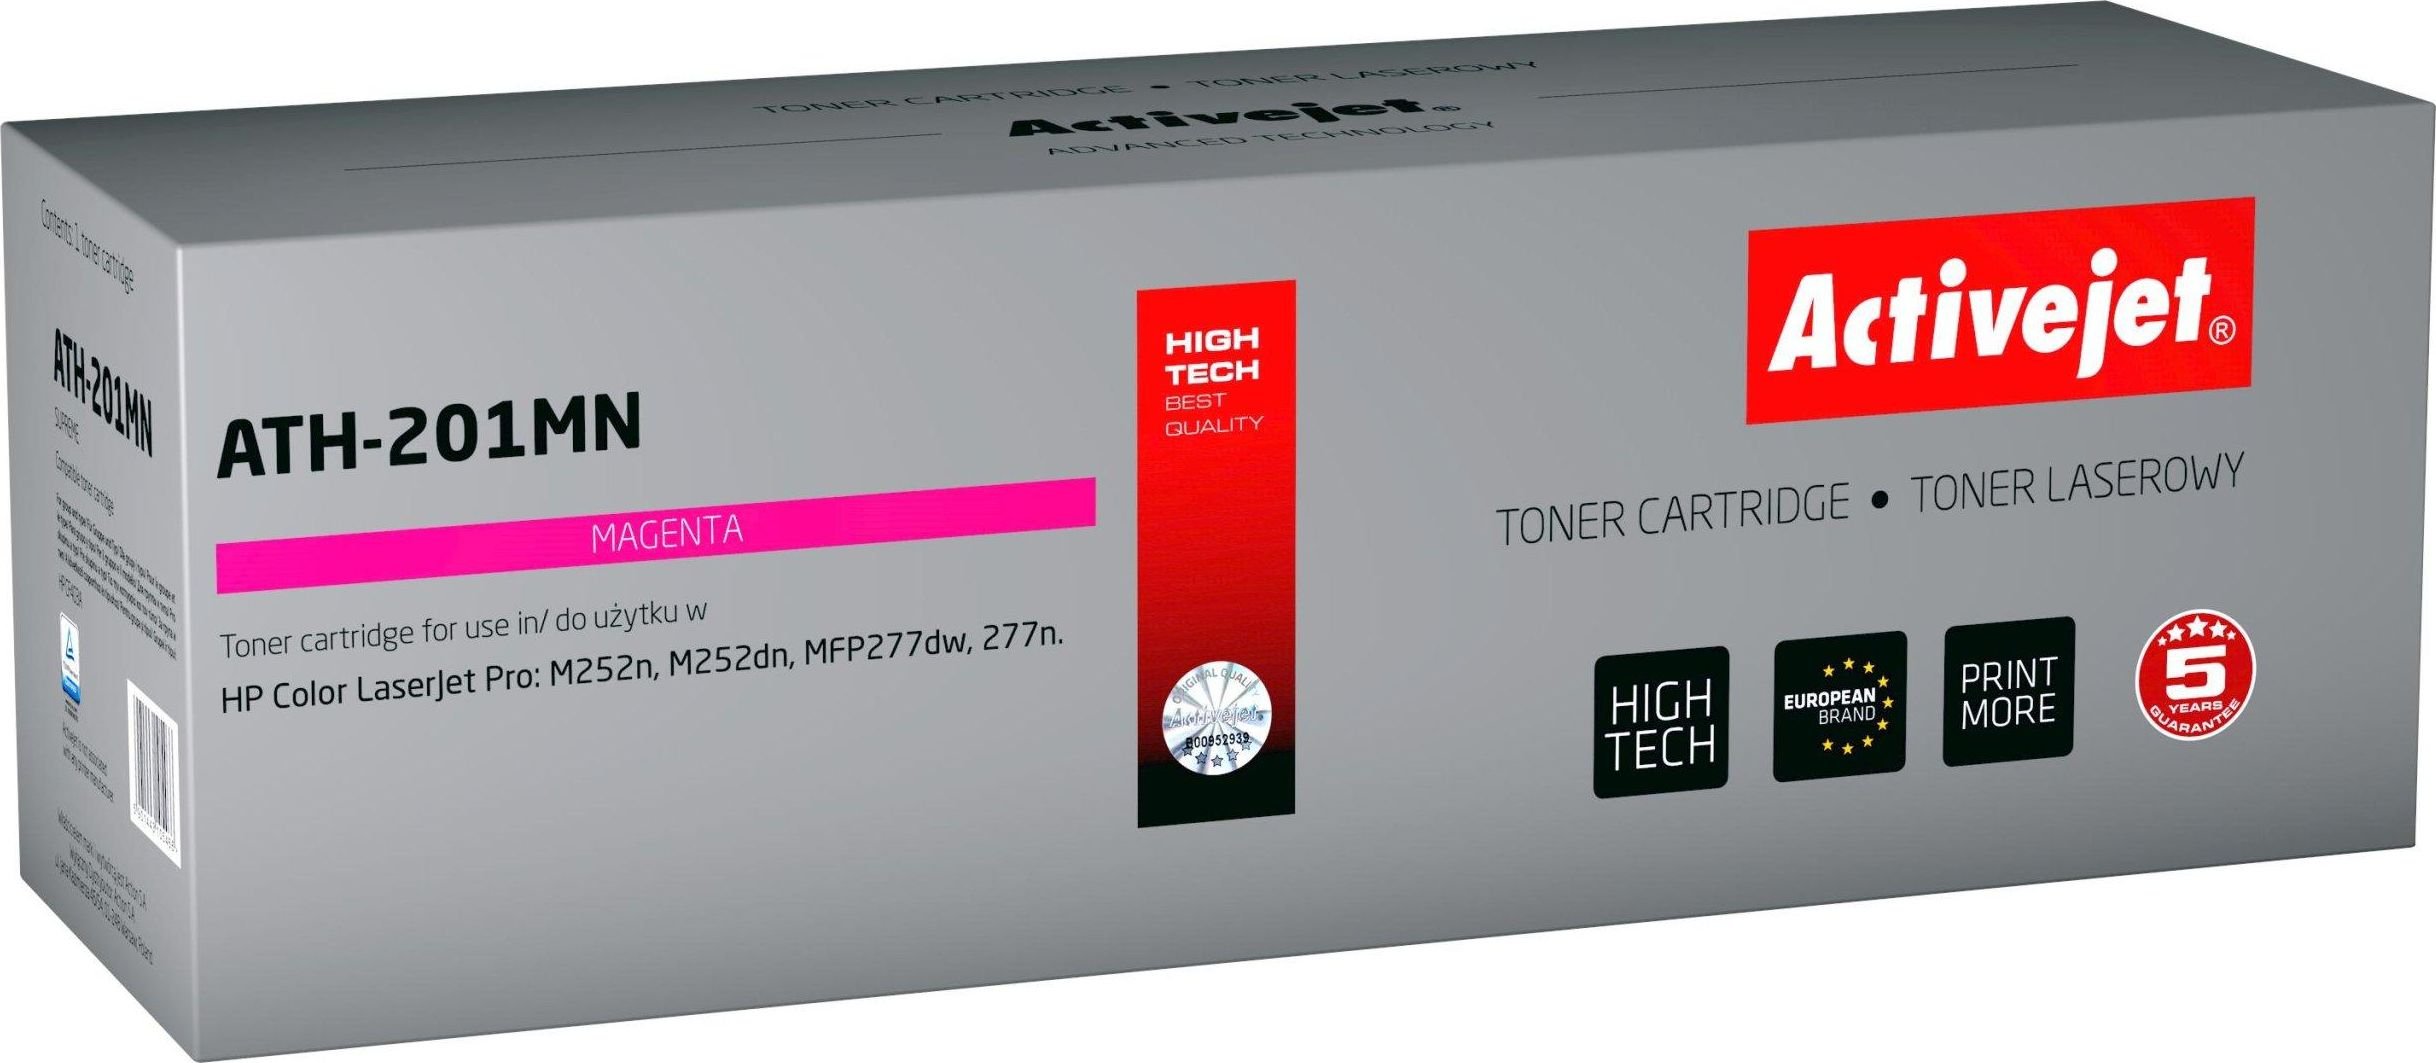 Toner laser Activejet ATH-201MN pentru imprimante HP